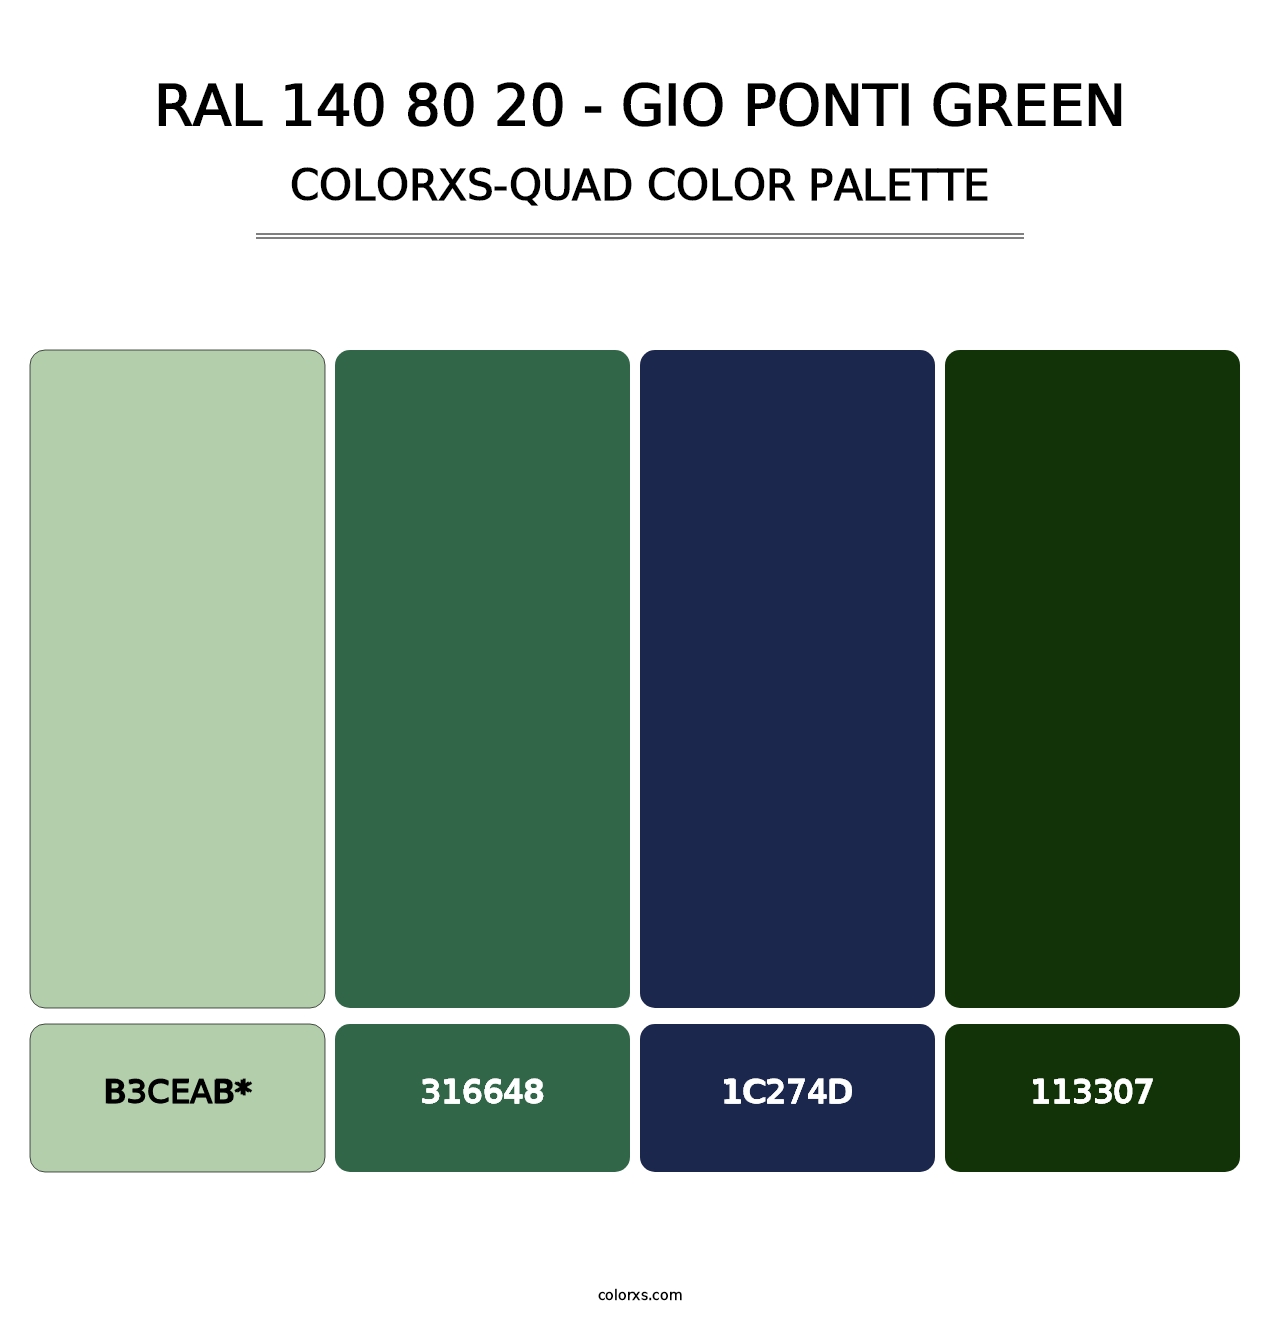 RAL 140 80 20 - Gio Ponti Green - Colorxs Quad Palette